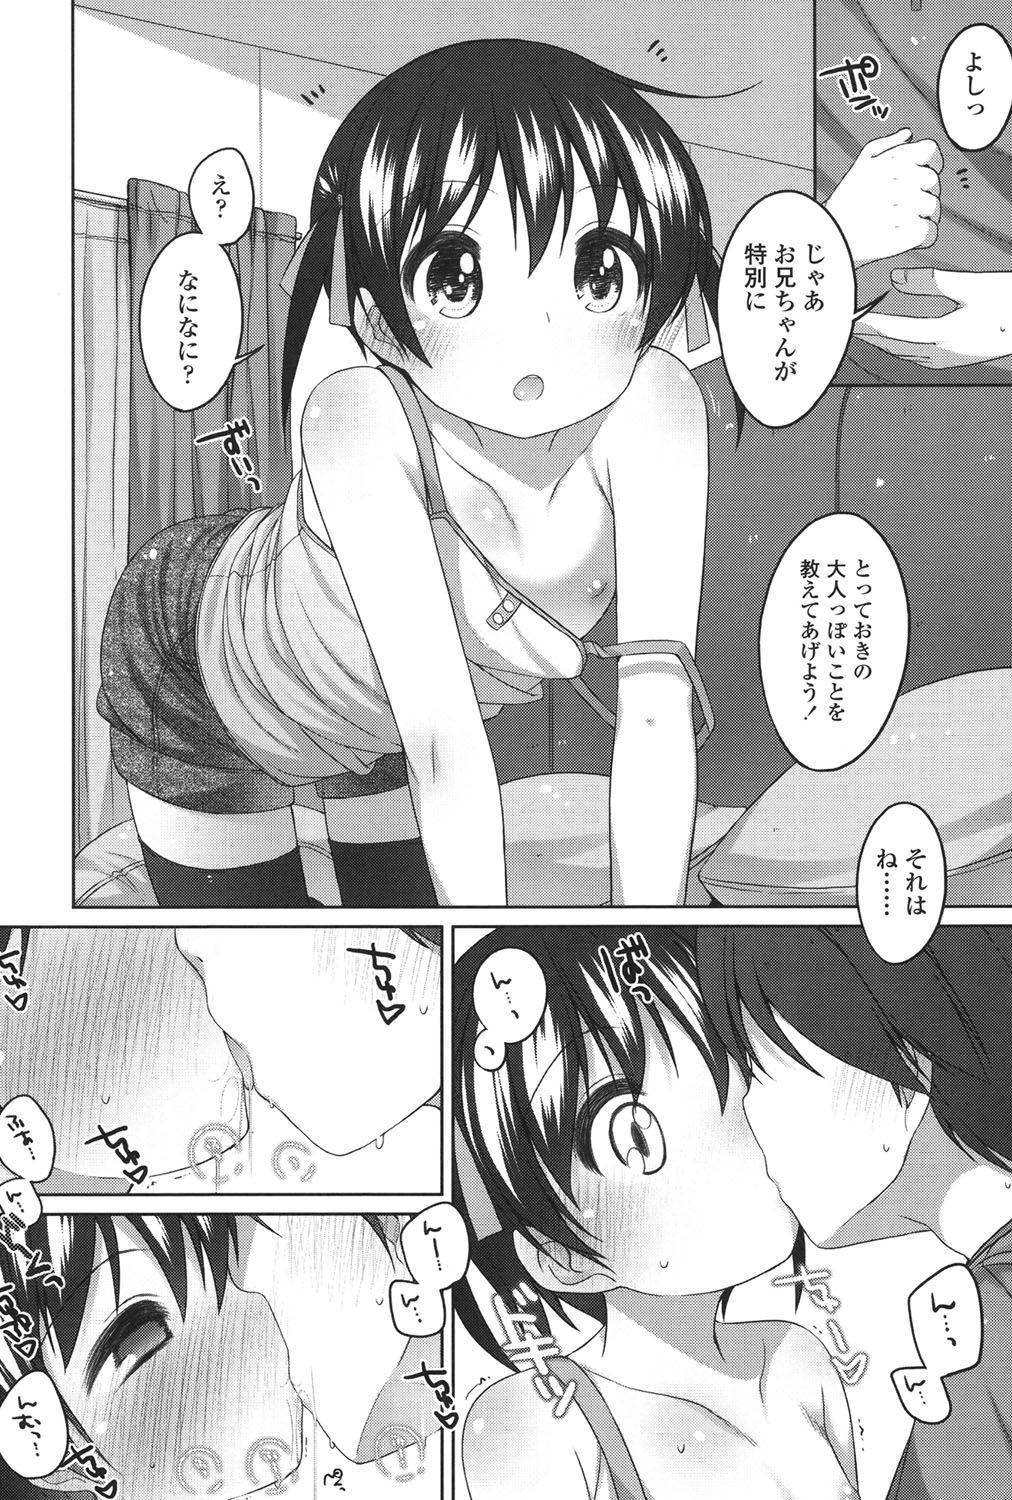 Chiisaiko Iiyone Page 33 IMHentai